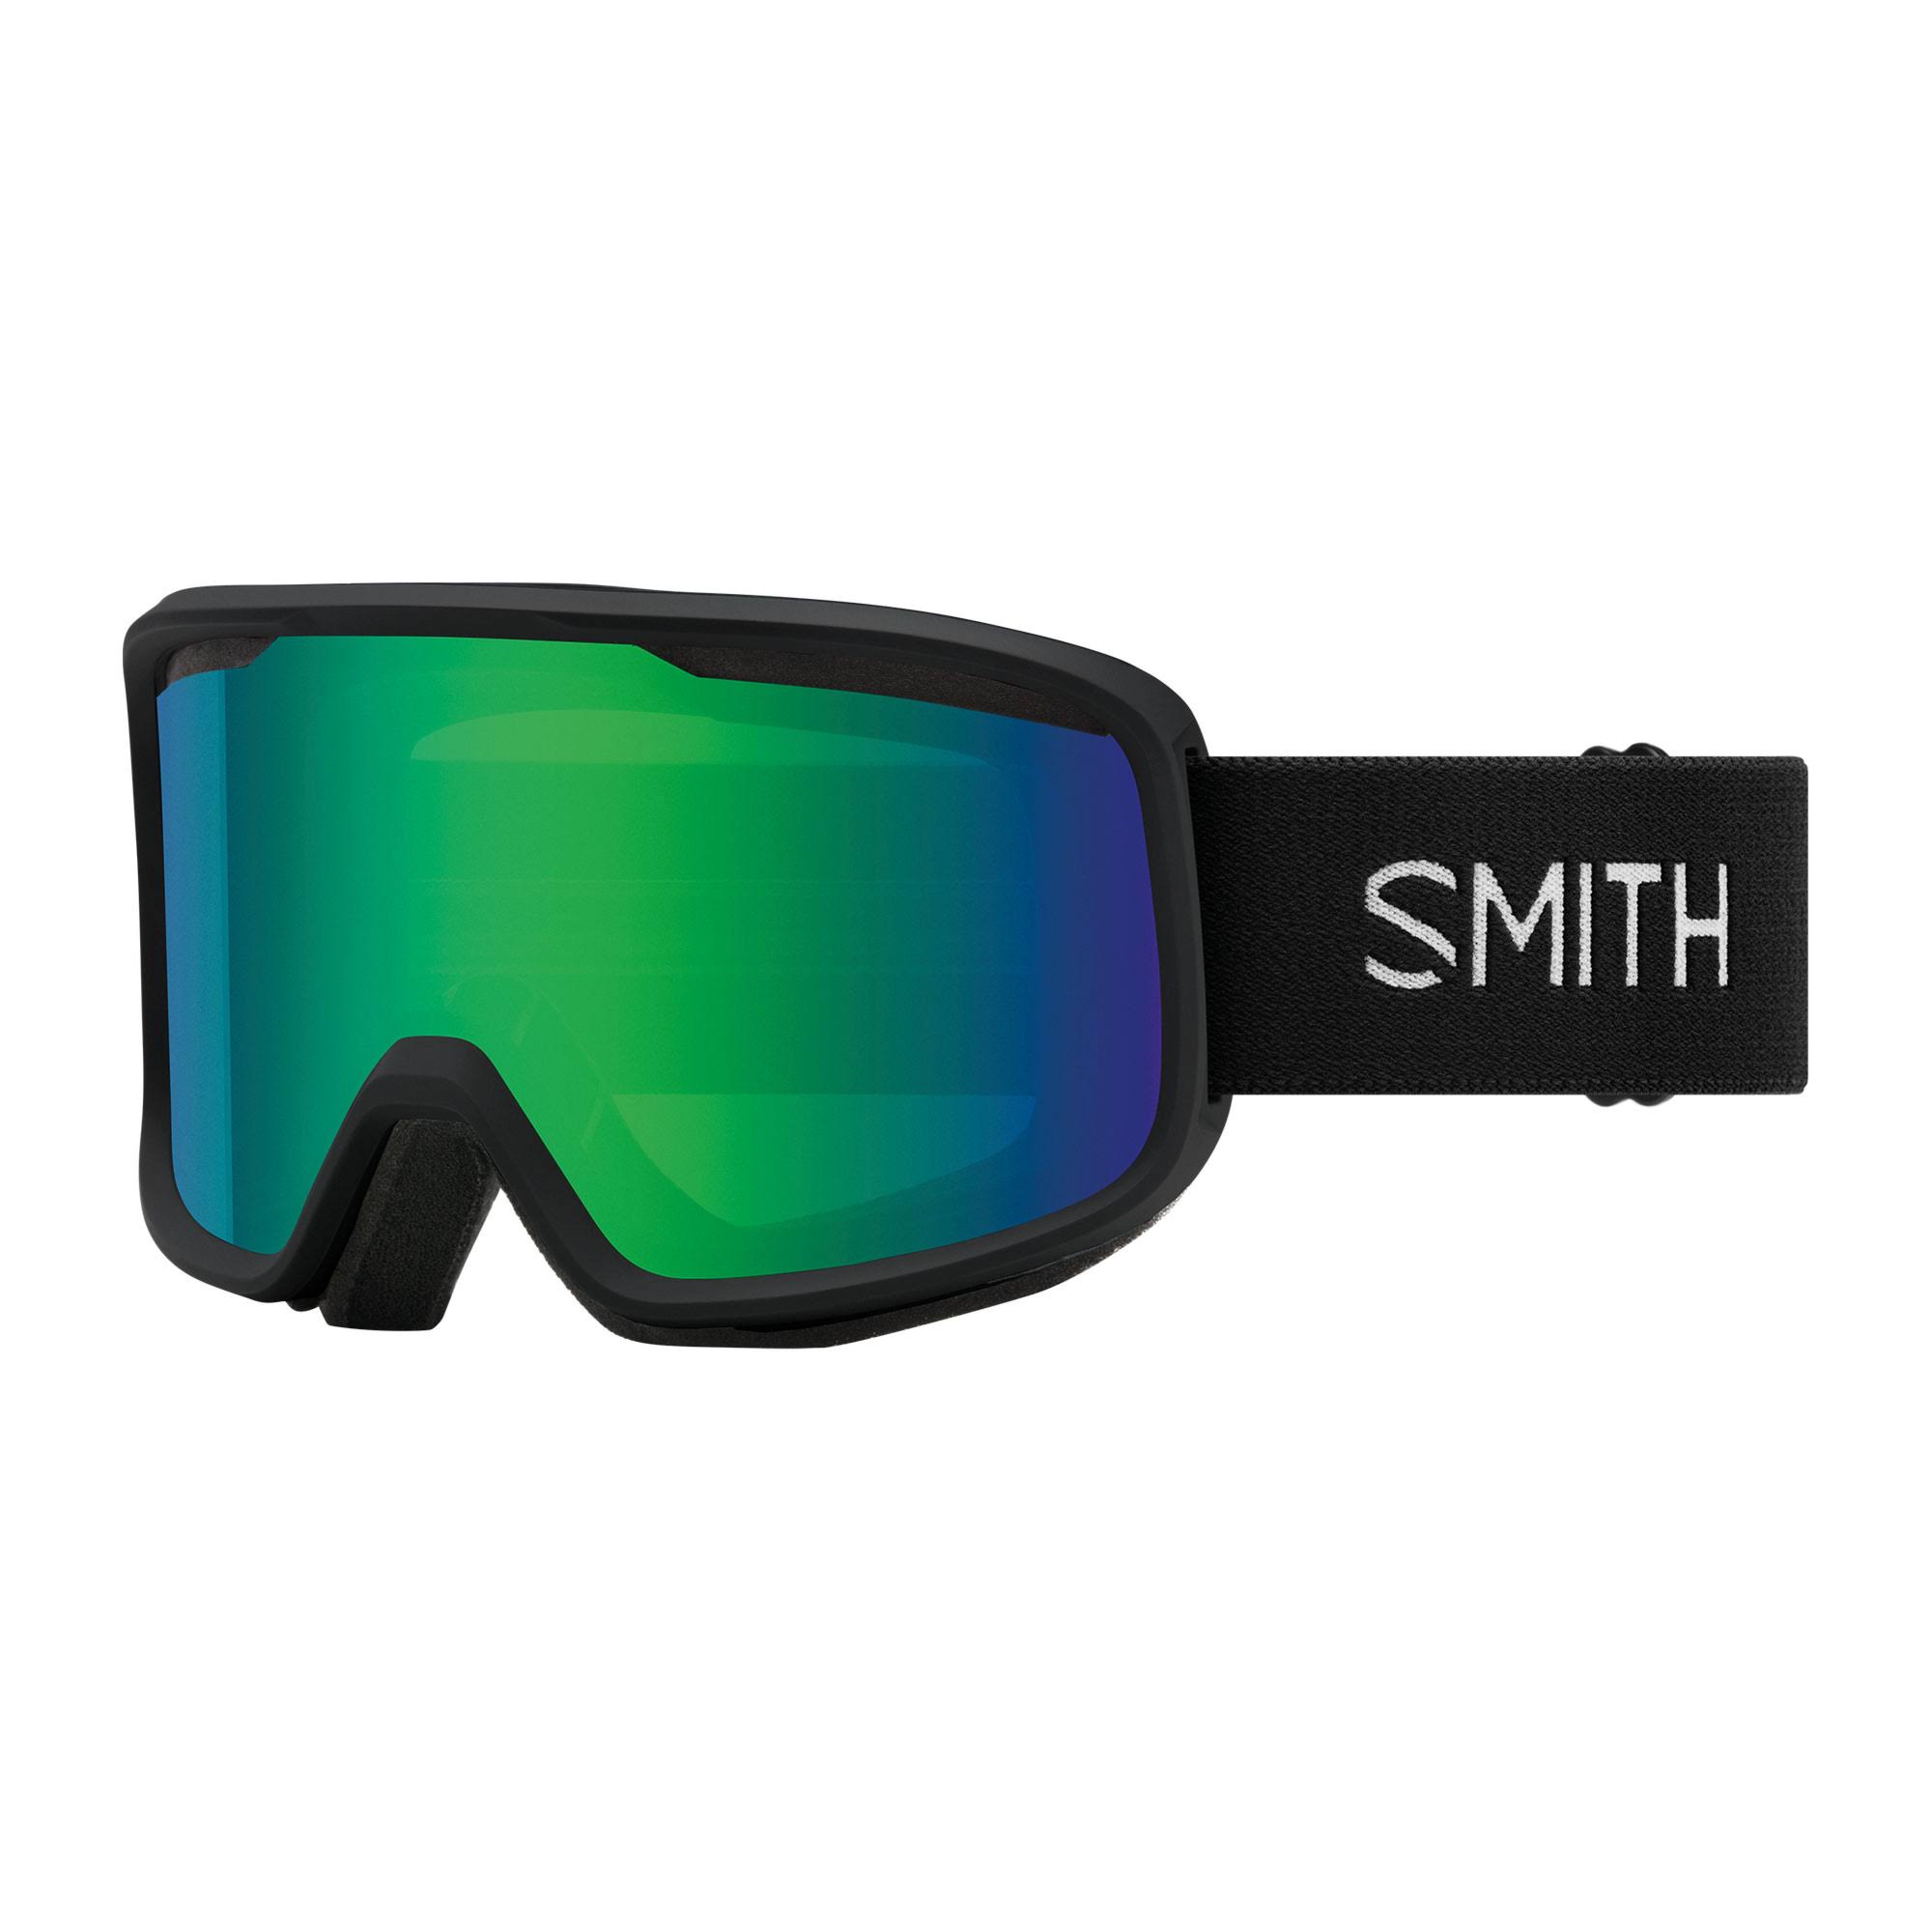 Smith - Frontier Black Green Sol-X Mirror - Goggles